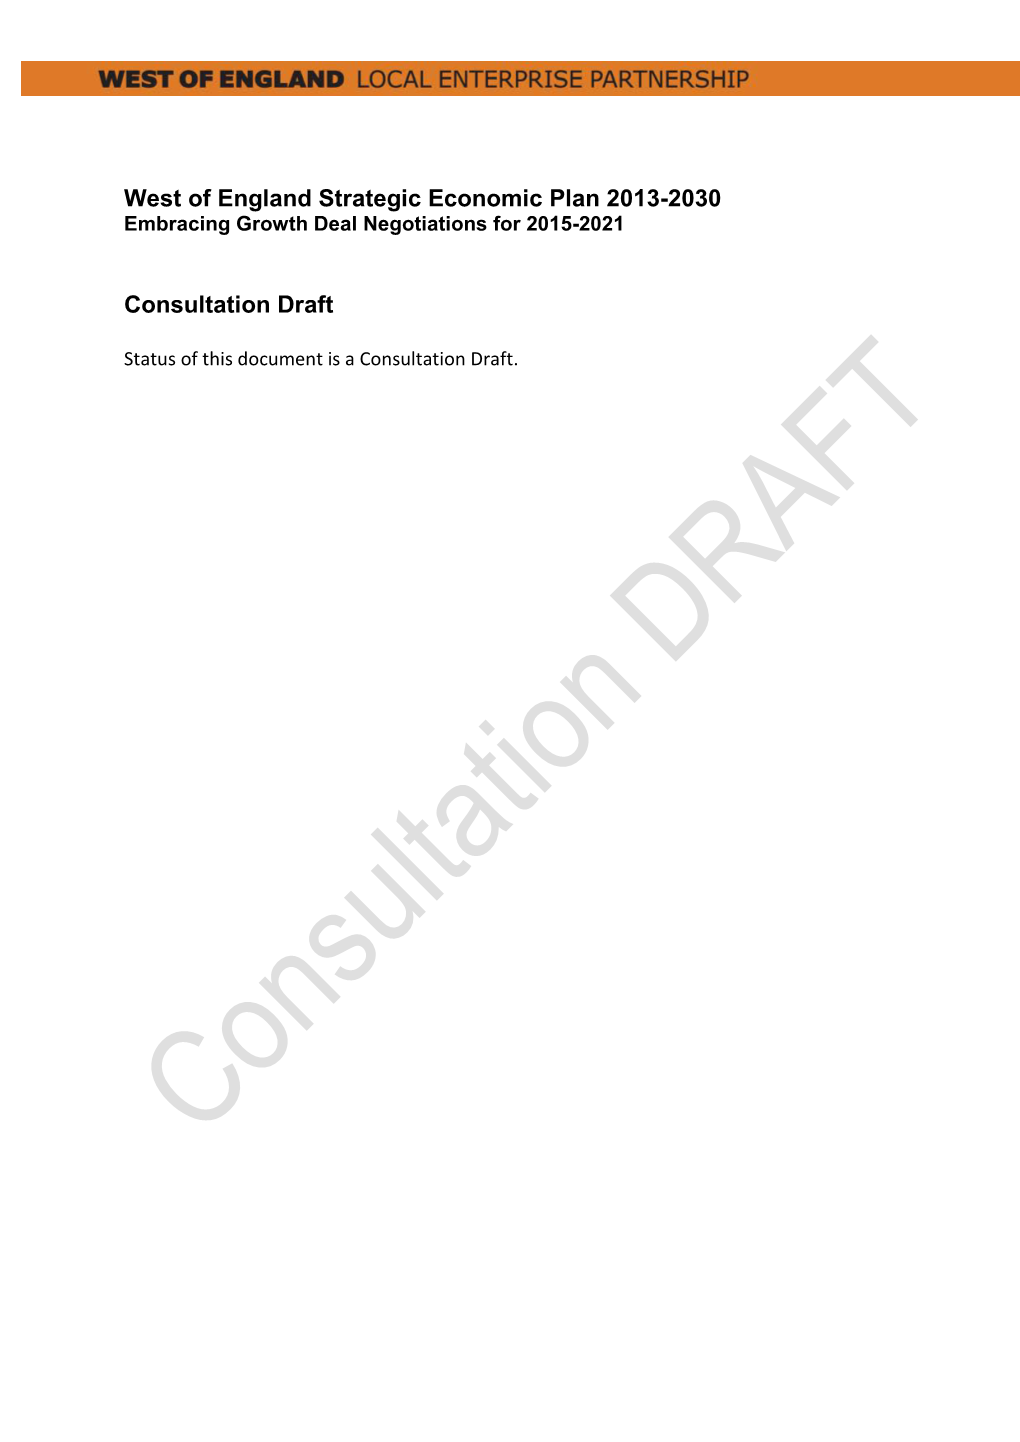 West of England Strategic Economic Plan 2013-2030 Consultation Draft